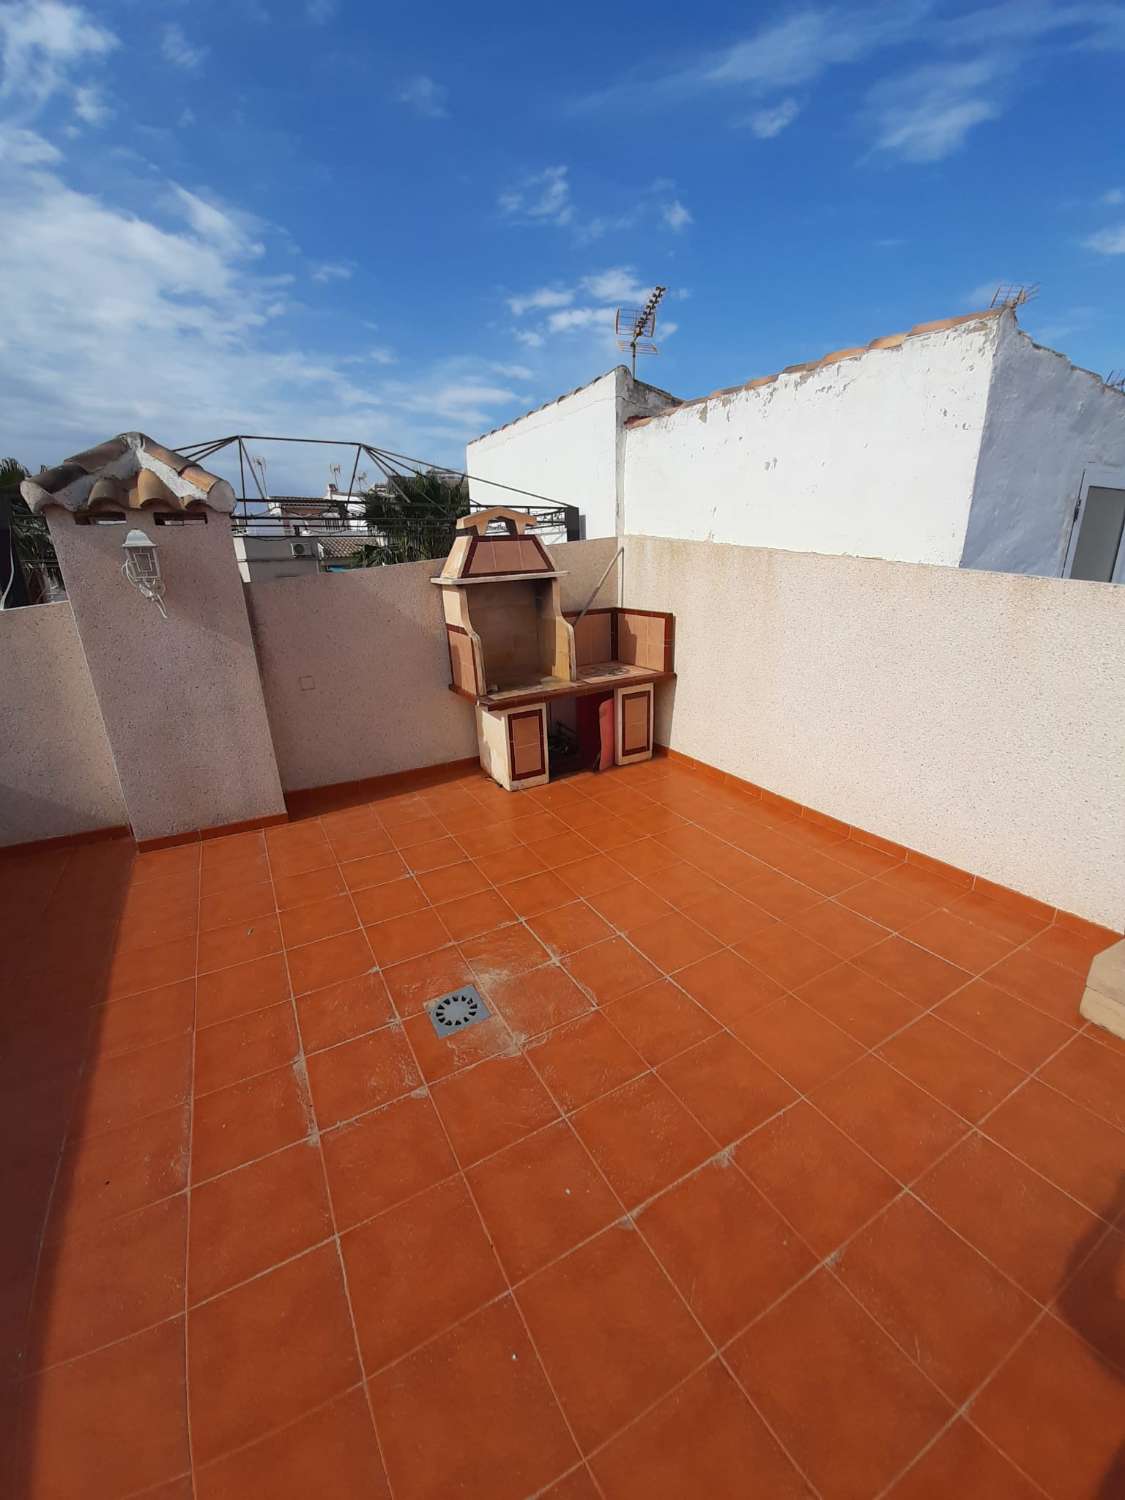 Semi-detached duplex bungalow 3 bedrooms, pool in Torrevieja (Costa Blanca South)